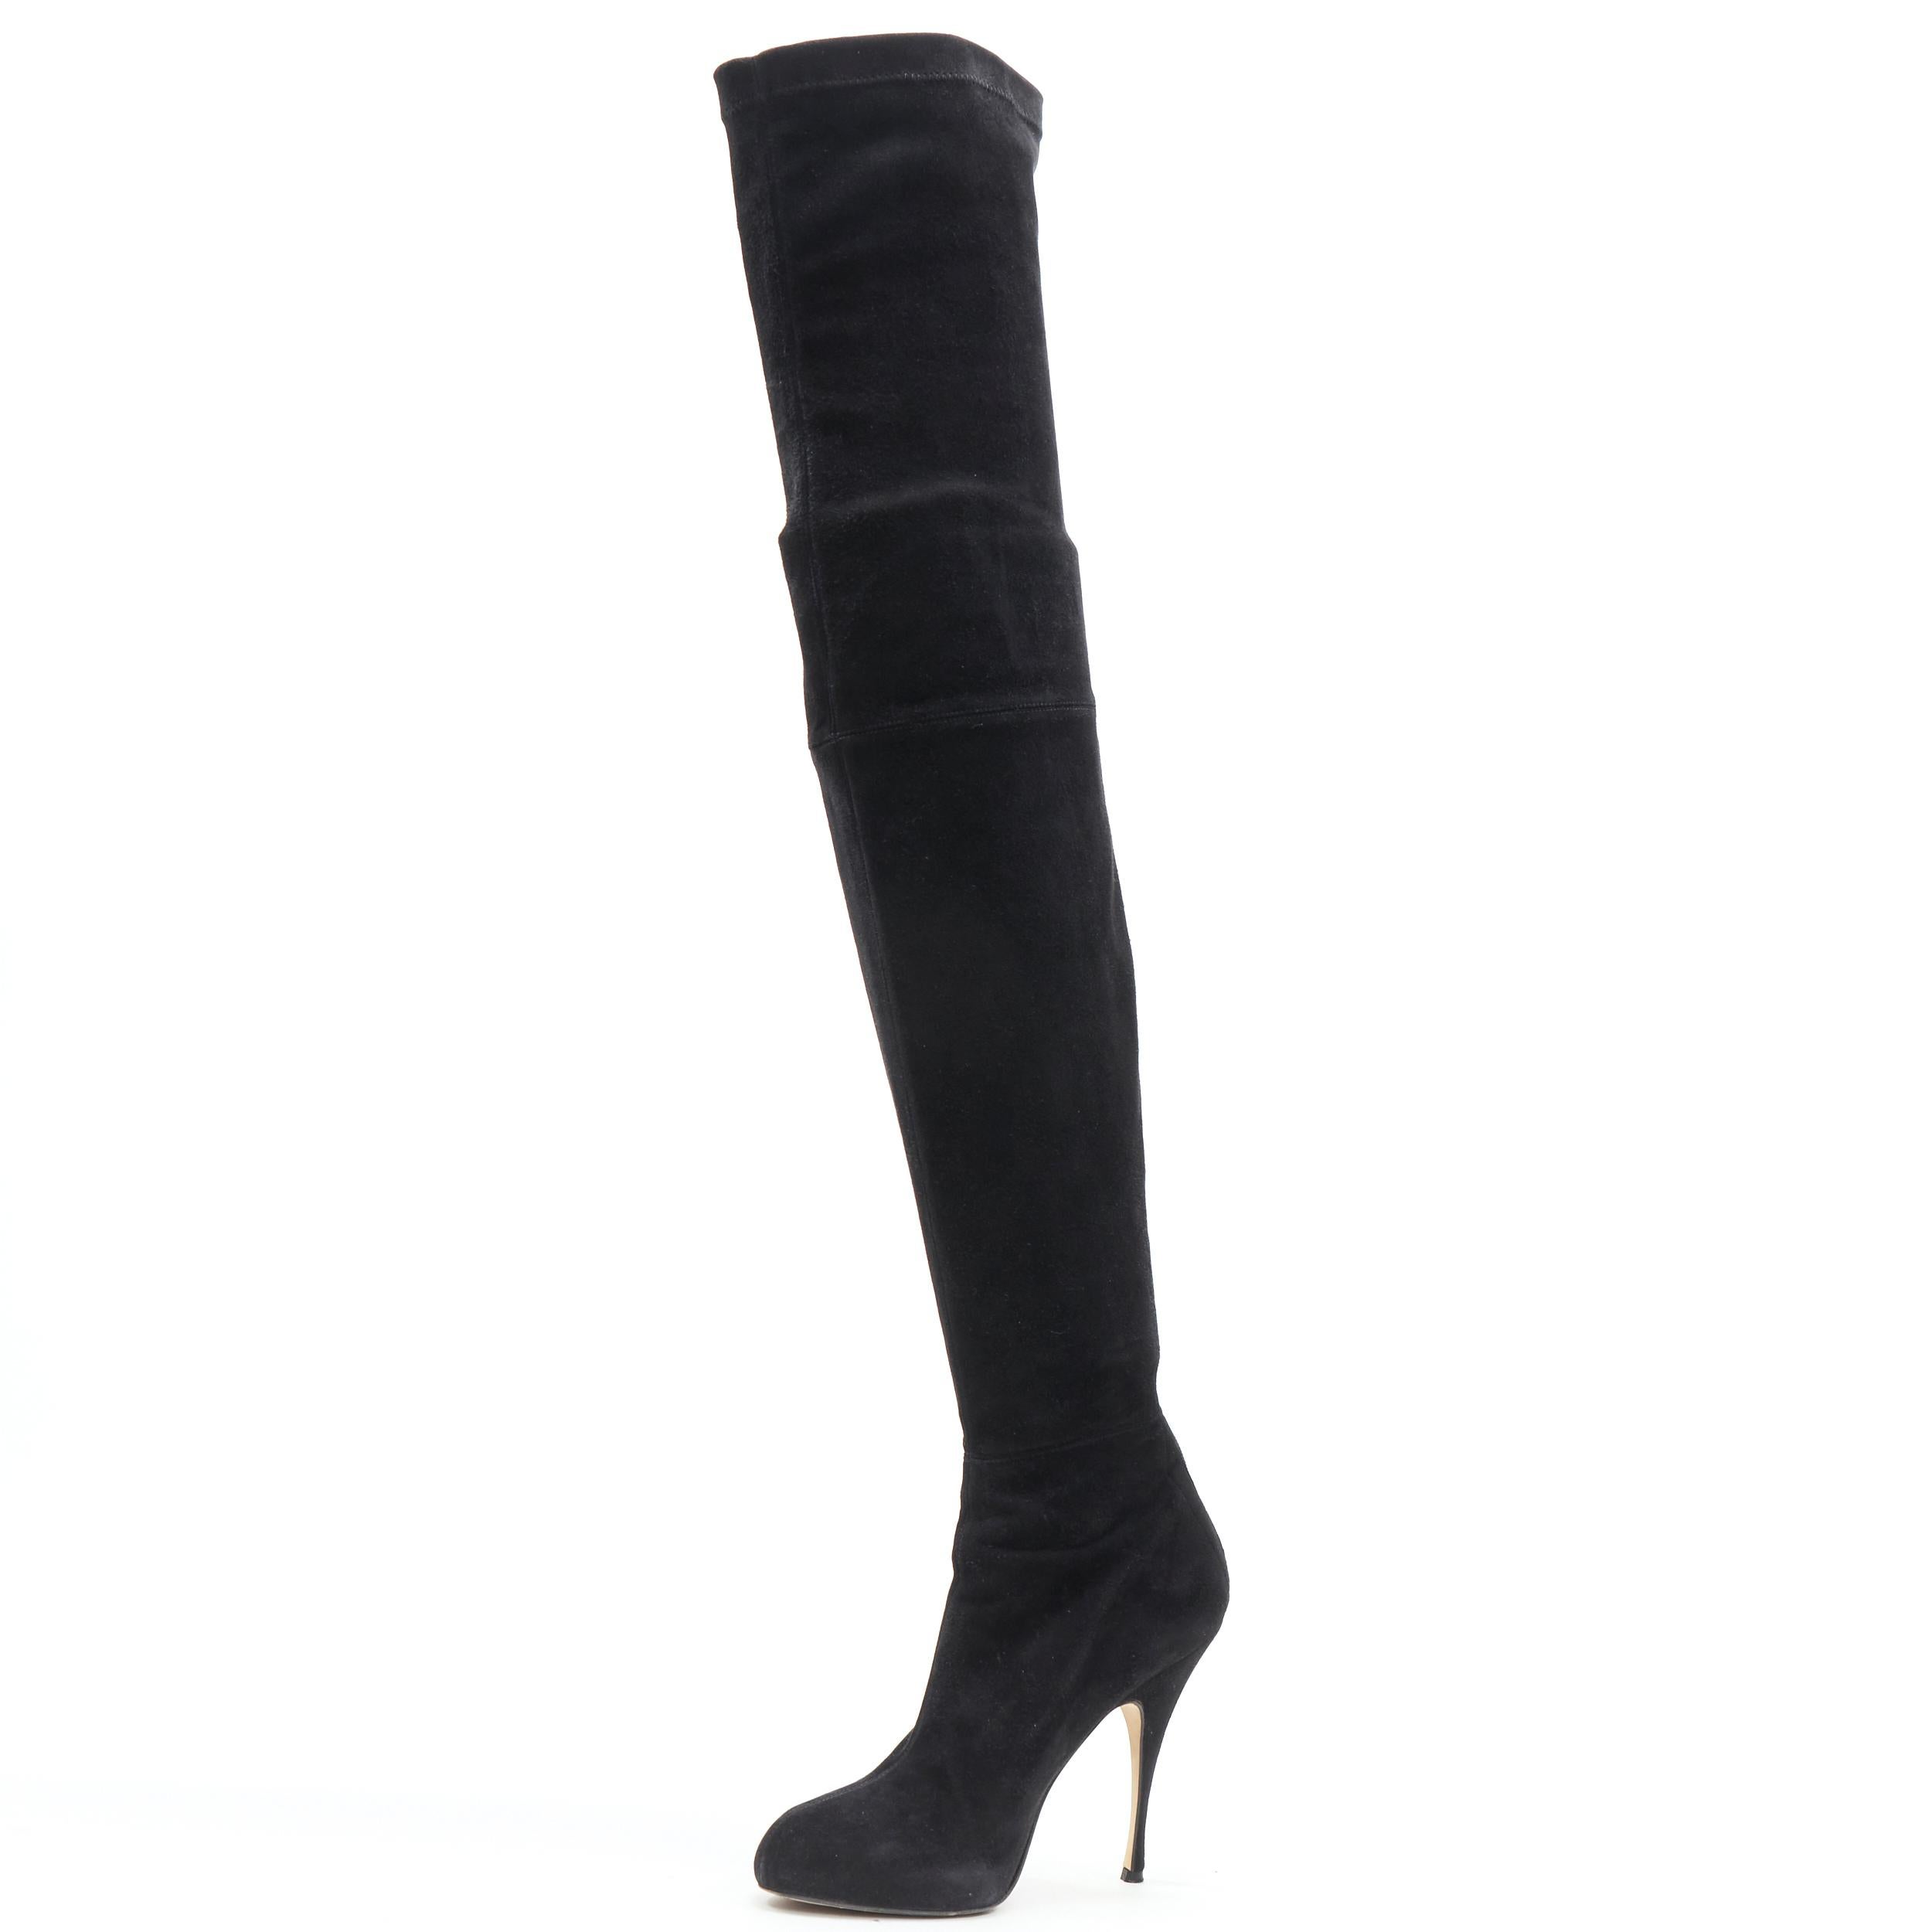 black suede thigh high stiletto boots